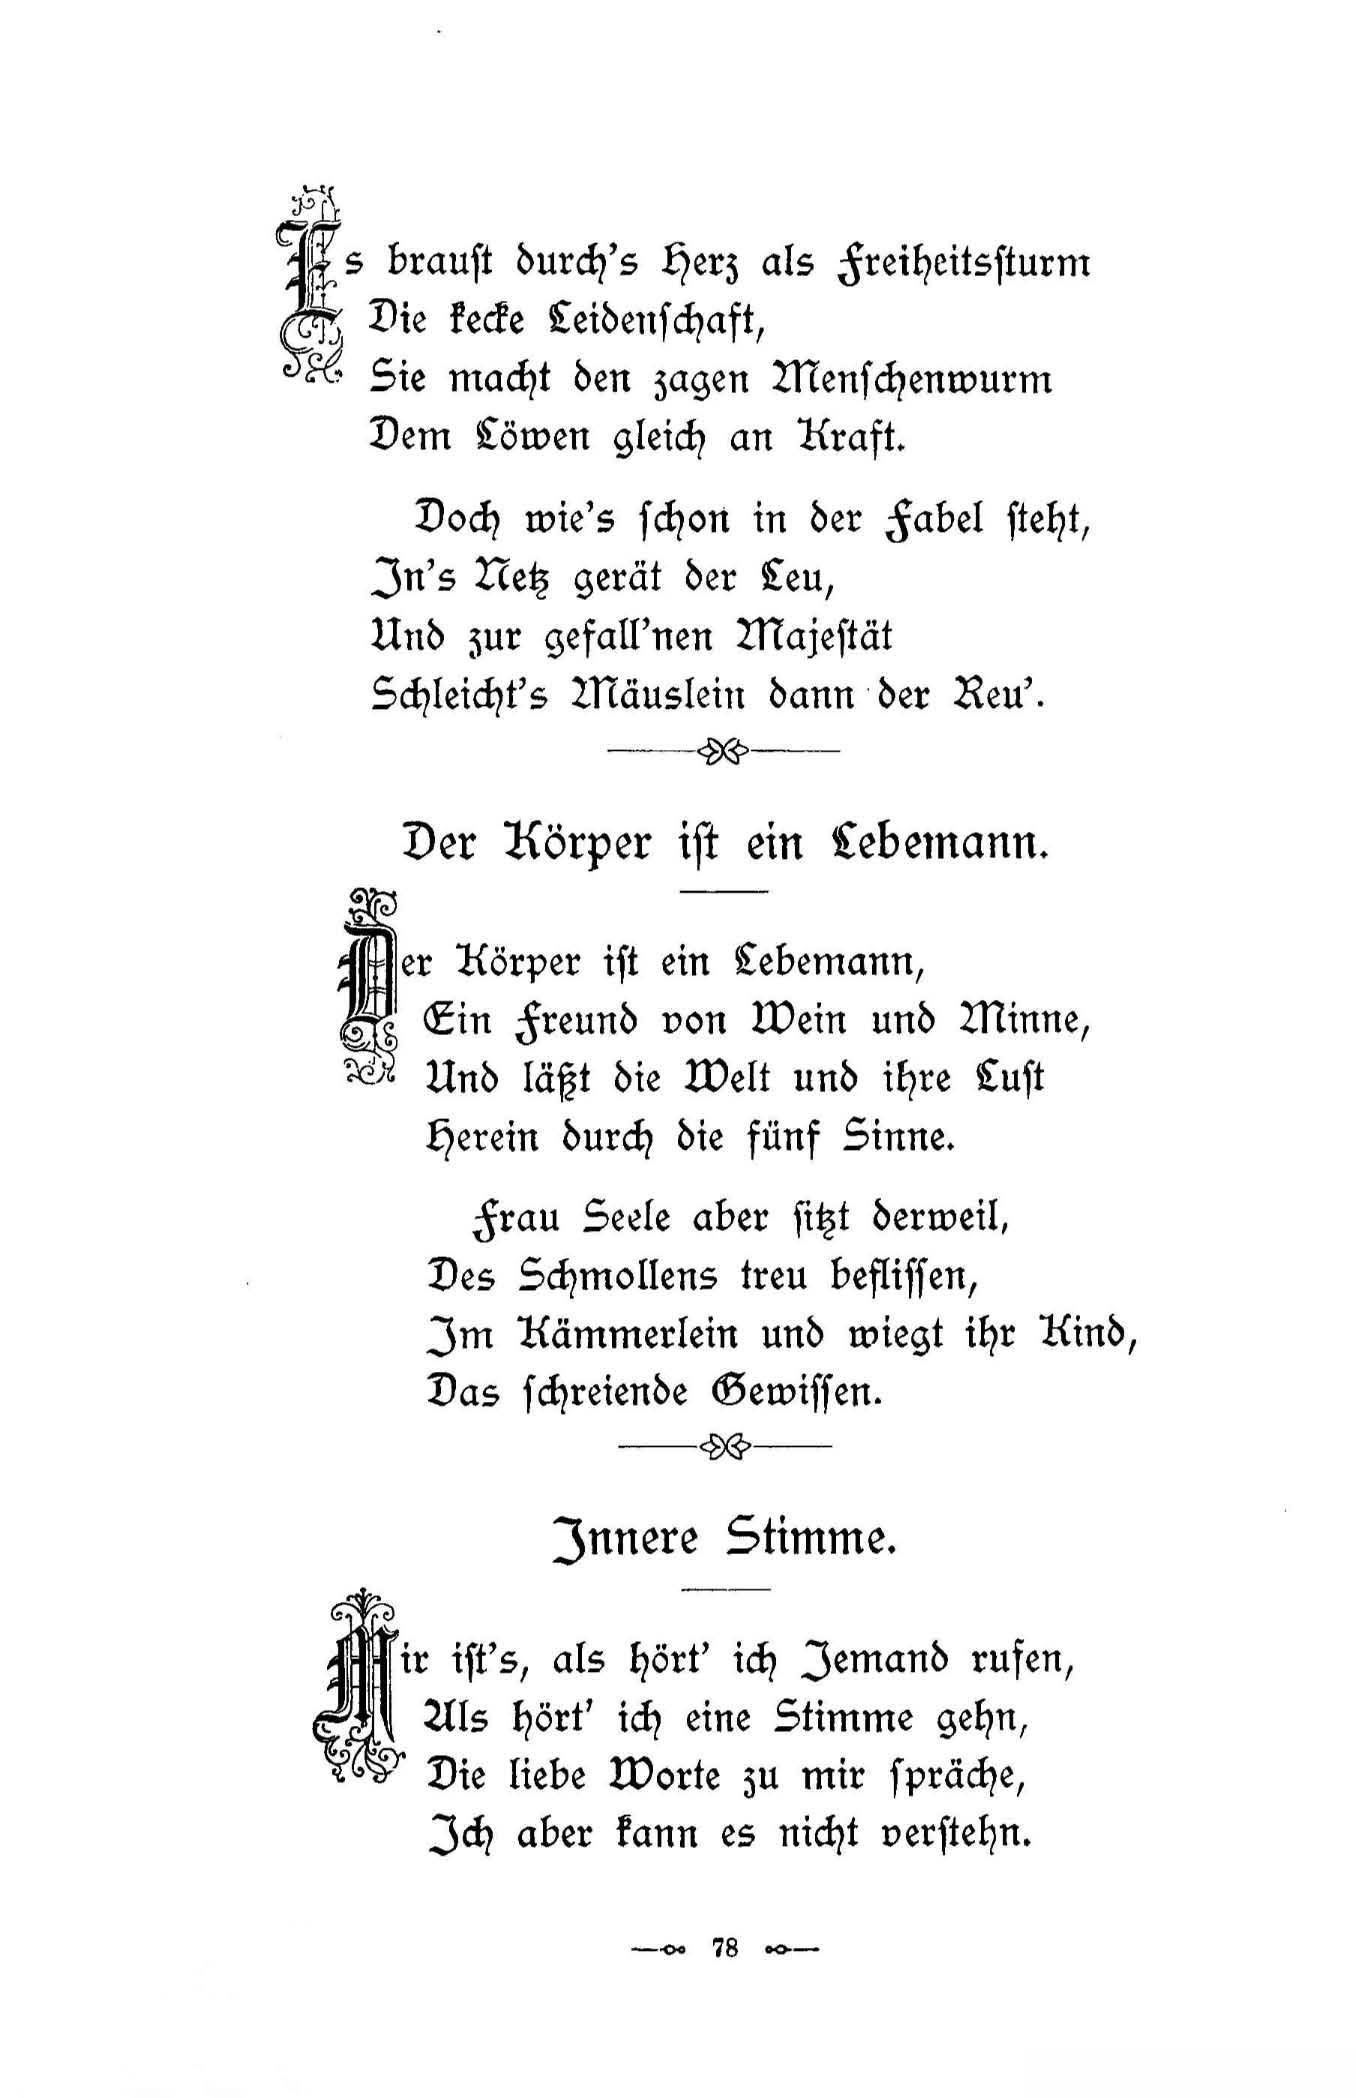 Der Körper ist eine Lebemann (1896) | 1. (78) Основной текст